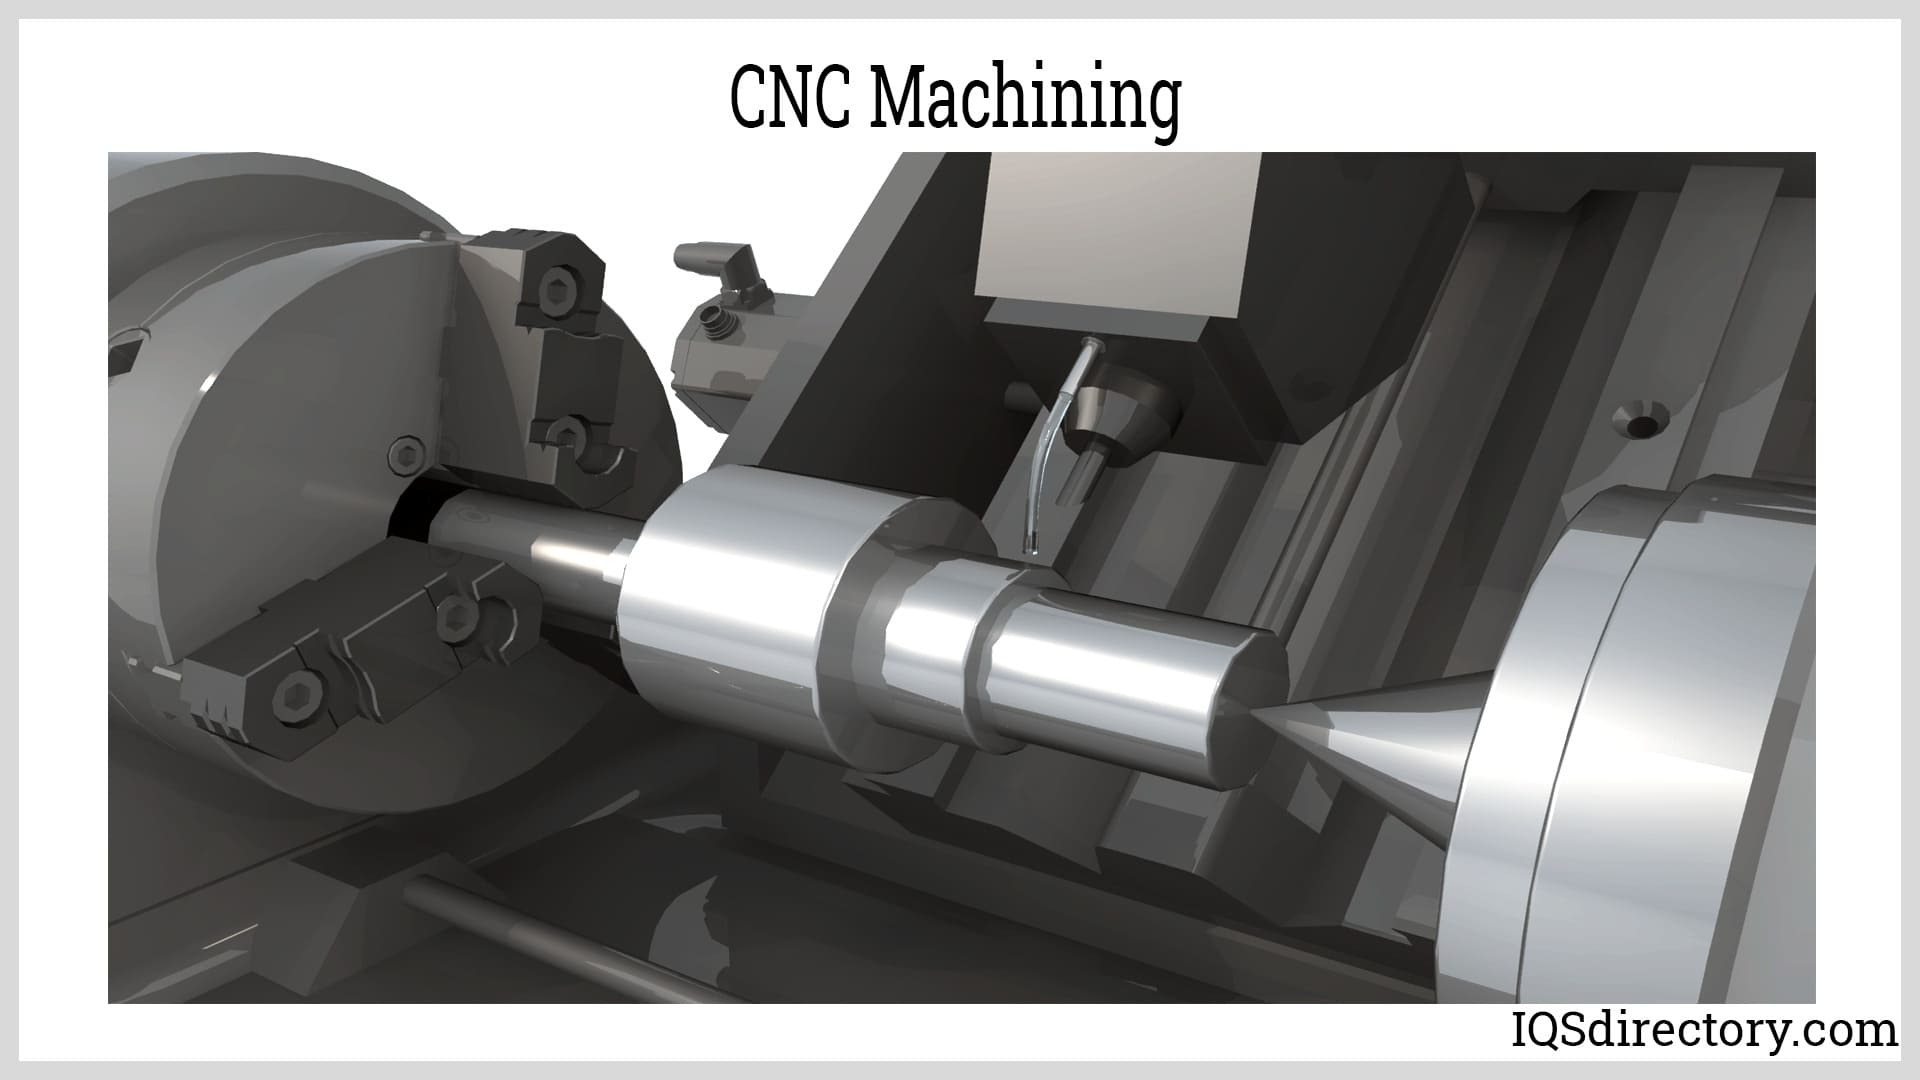 CNC Machining 